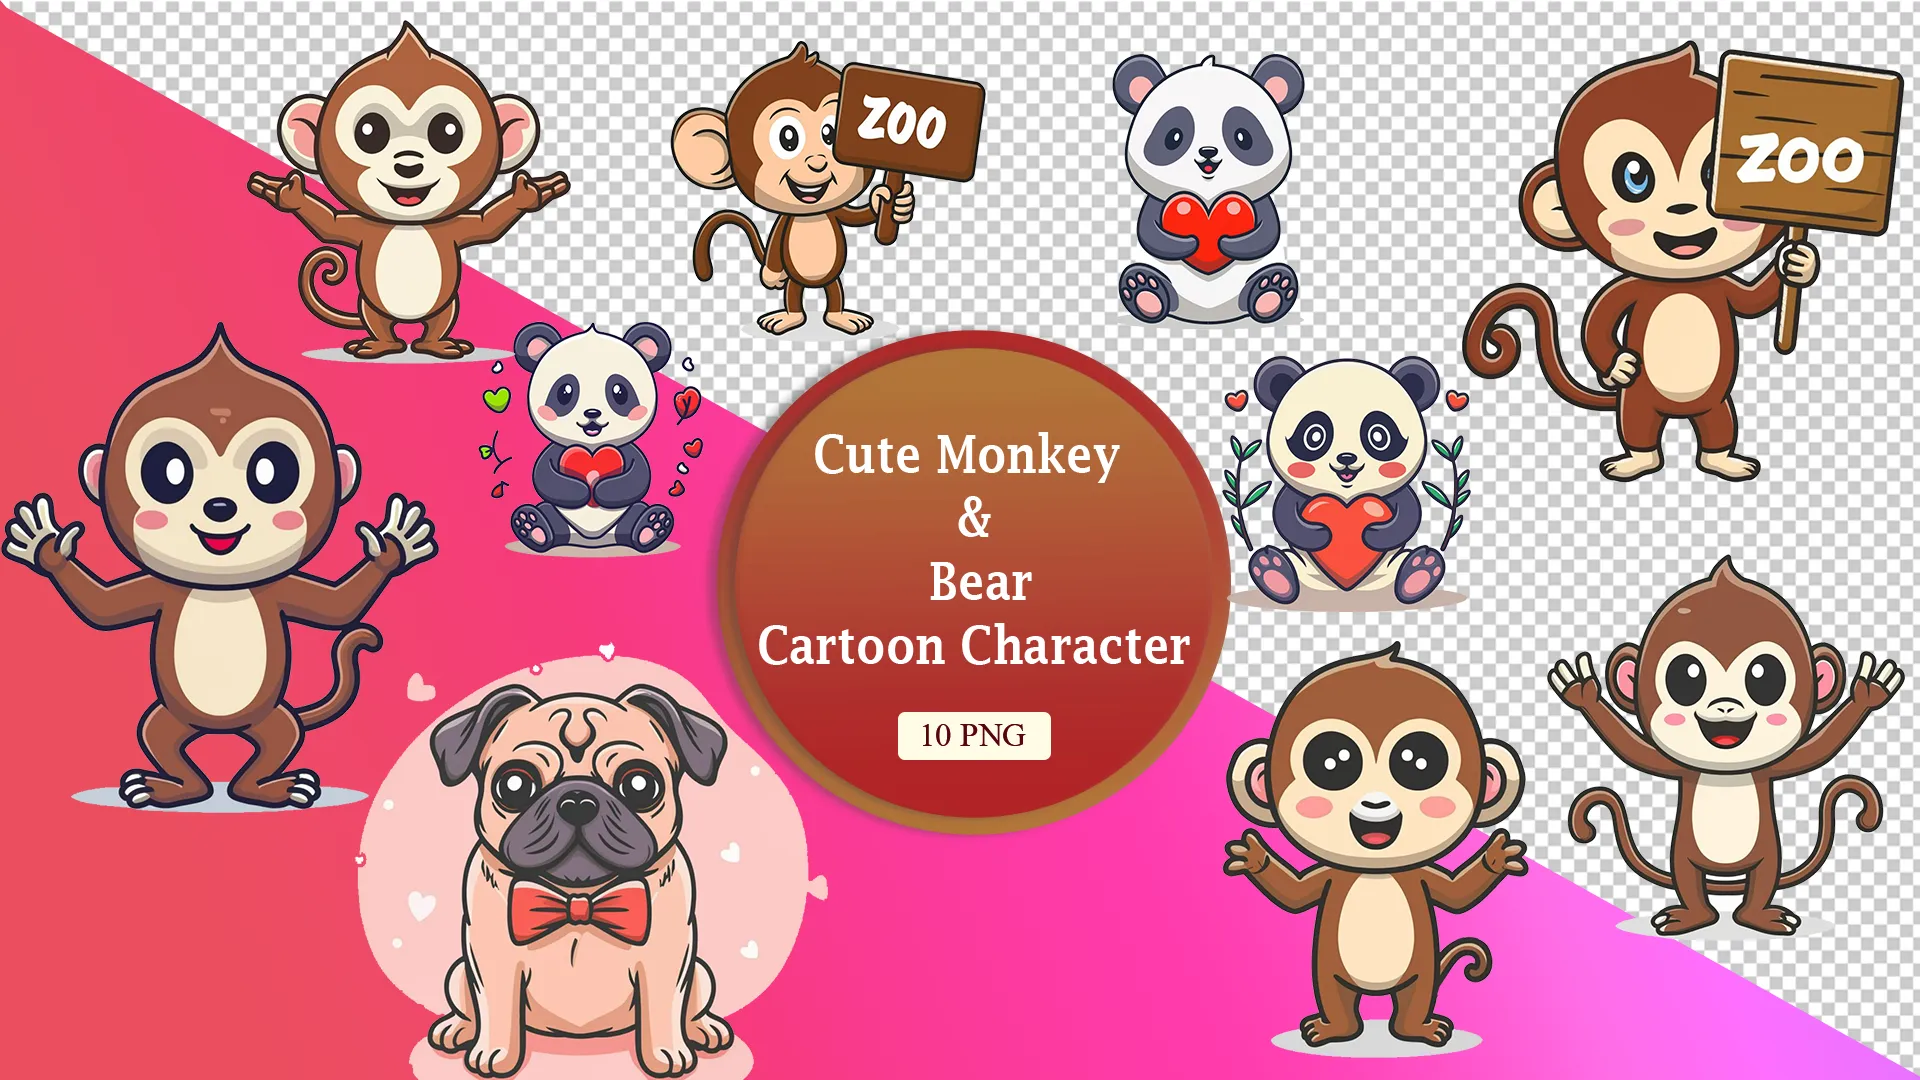 Cartoon Monkeys and Panda Pack image